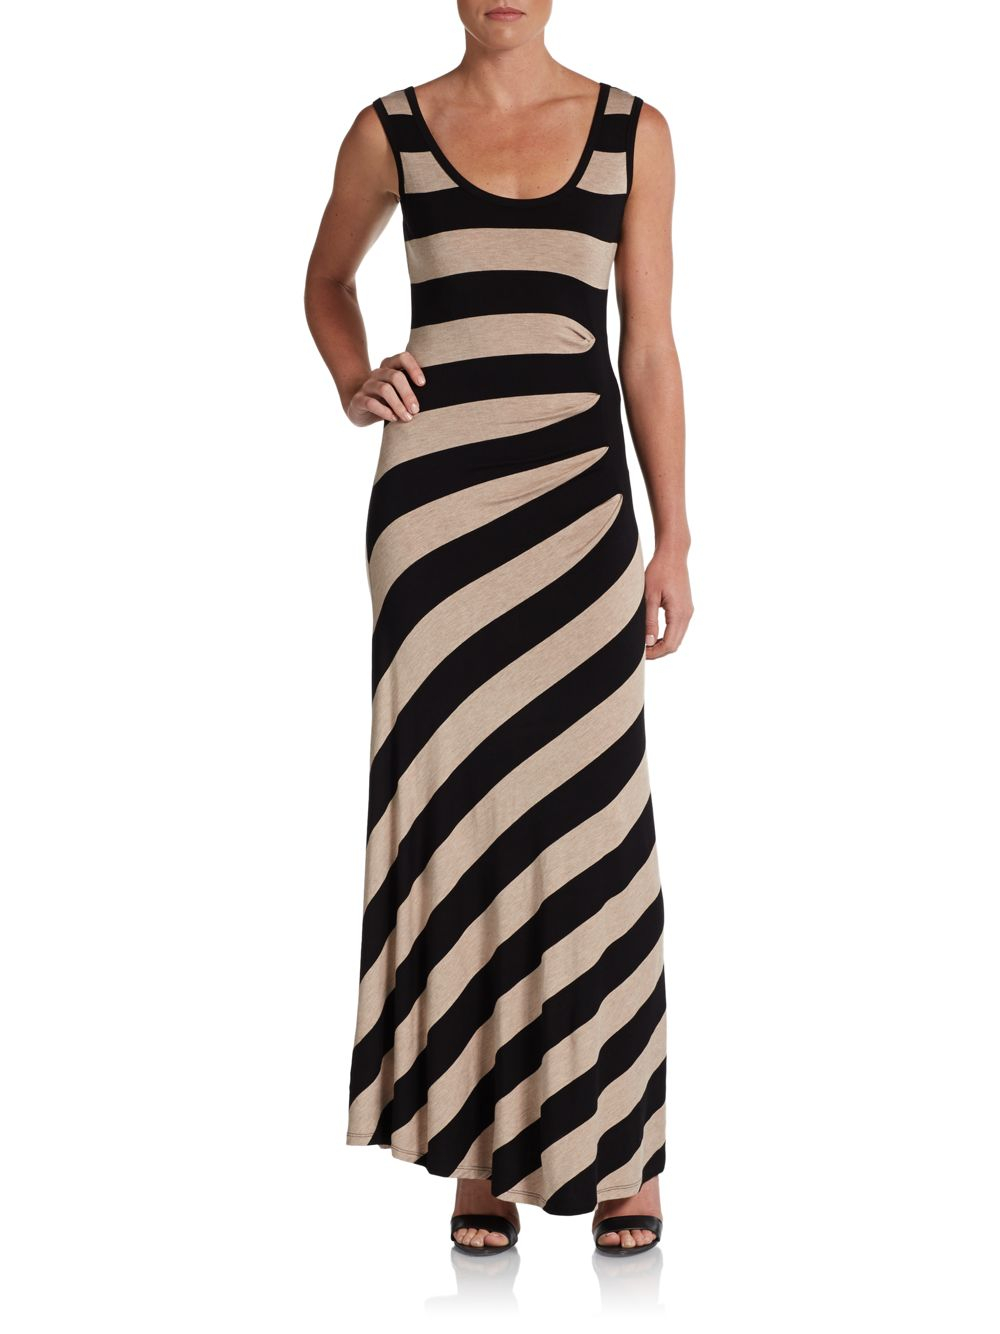 Lyst - Calvin klein Striped Ruched Maxi Dress in Black